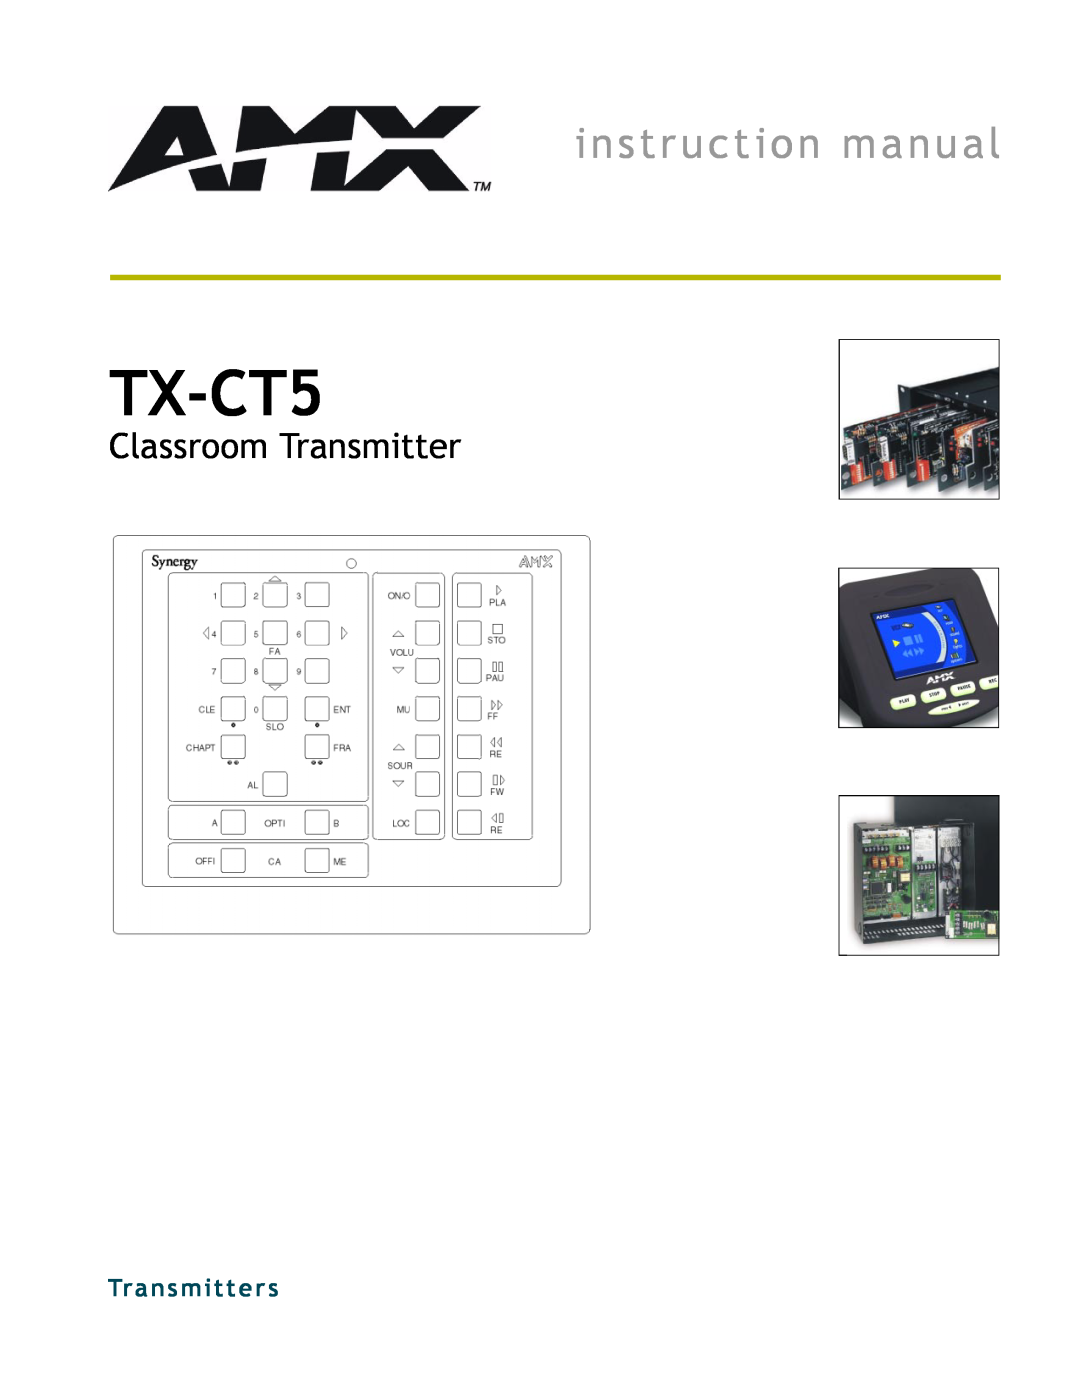 AMX TX-CT5 instruction manual Classroom Transmitter, Tran smitters 